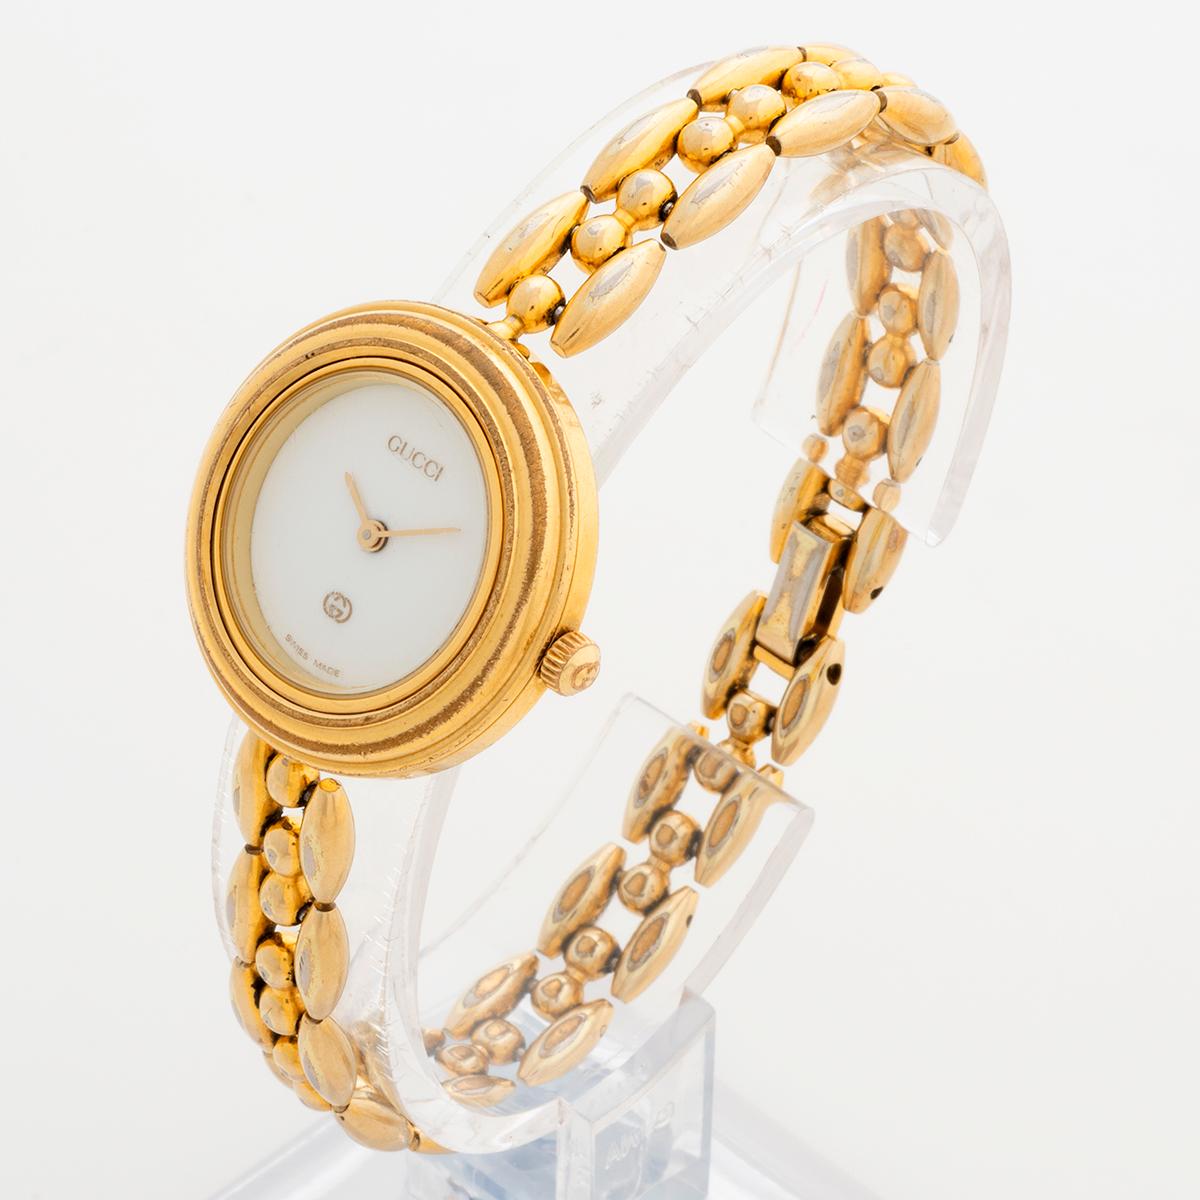 Women's Gucci 11.12 Interchangeable Bezel Ladies Wristwatch. Gold Plated. 170mm Bracelet